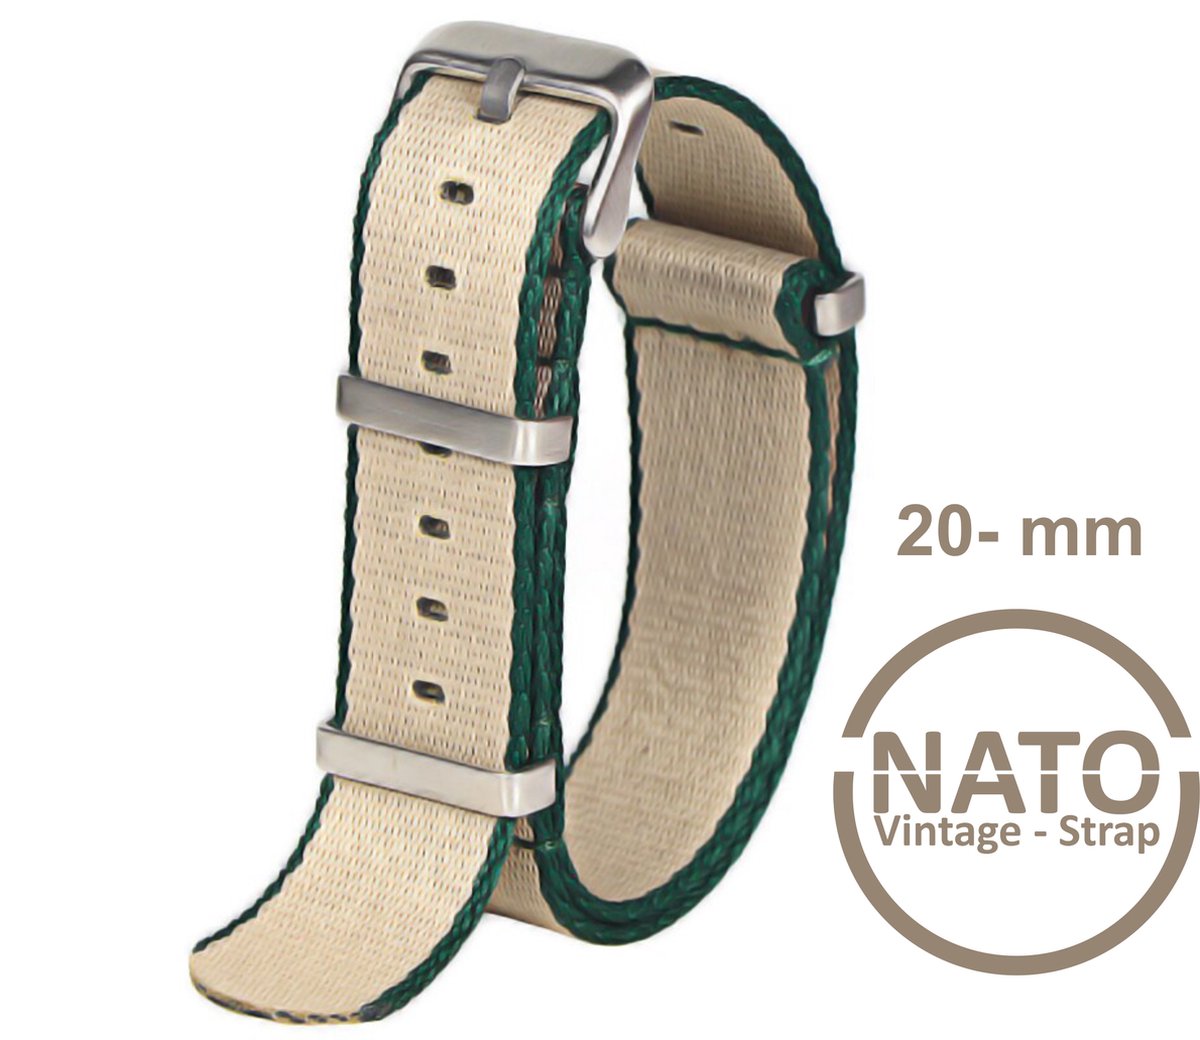 20mm Nato Strap GROEN CRÉME - Vintage James Bond - Nato Strap collectie - Mannen - Horlogeband - 20 mm bandbreedte